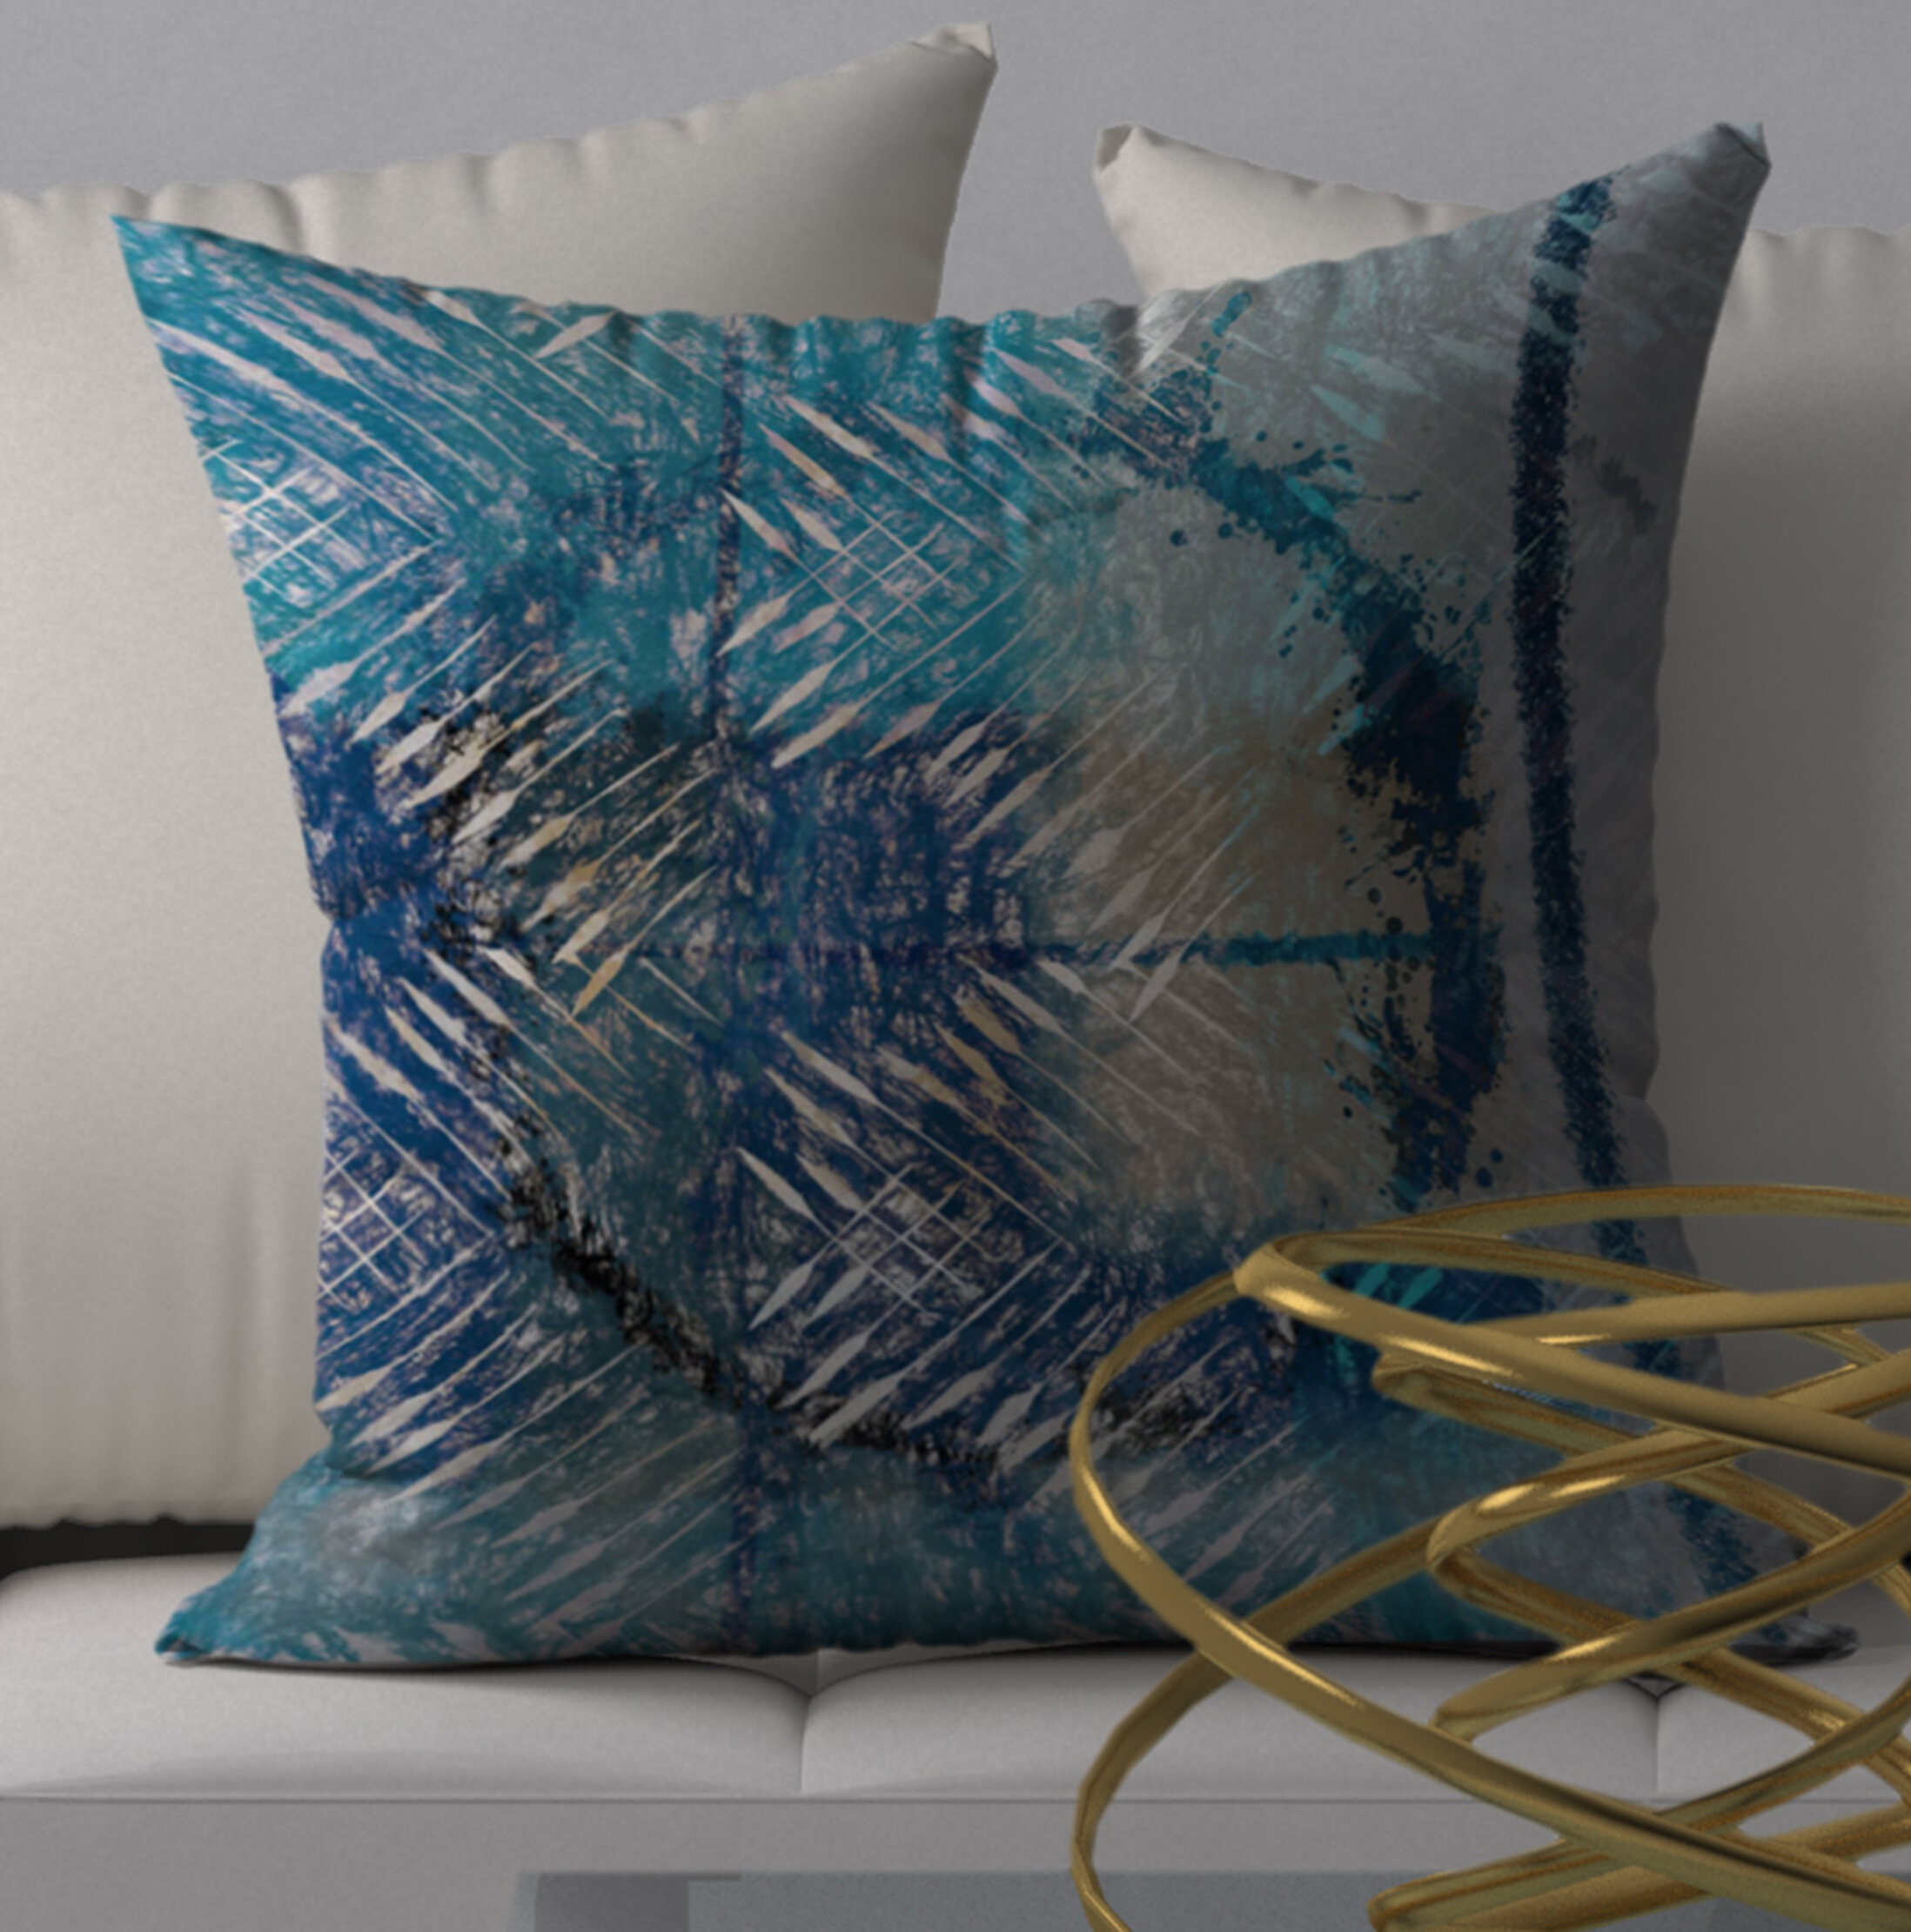 Pleasure Flourishing Decorative Square Pillow Cover & Insert Orren Ellis Size: 24 x 24